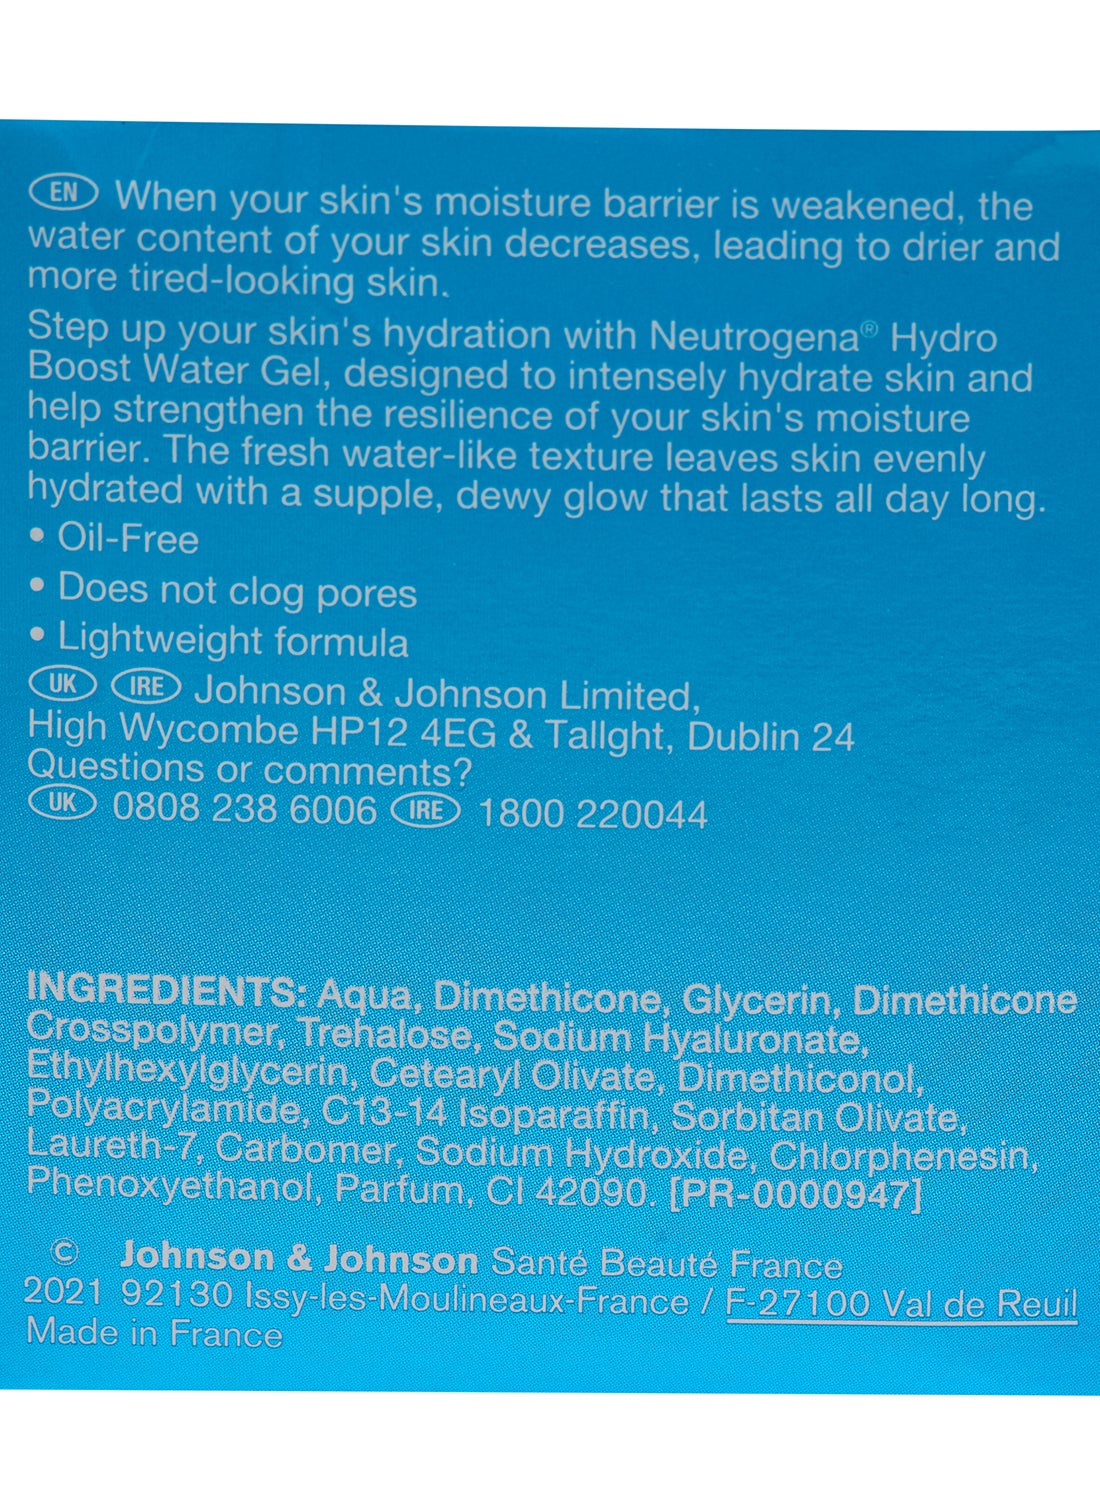 Neutrogena Hydro Boost Water Gel 50ml 